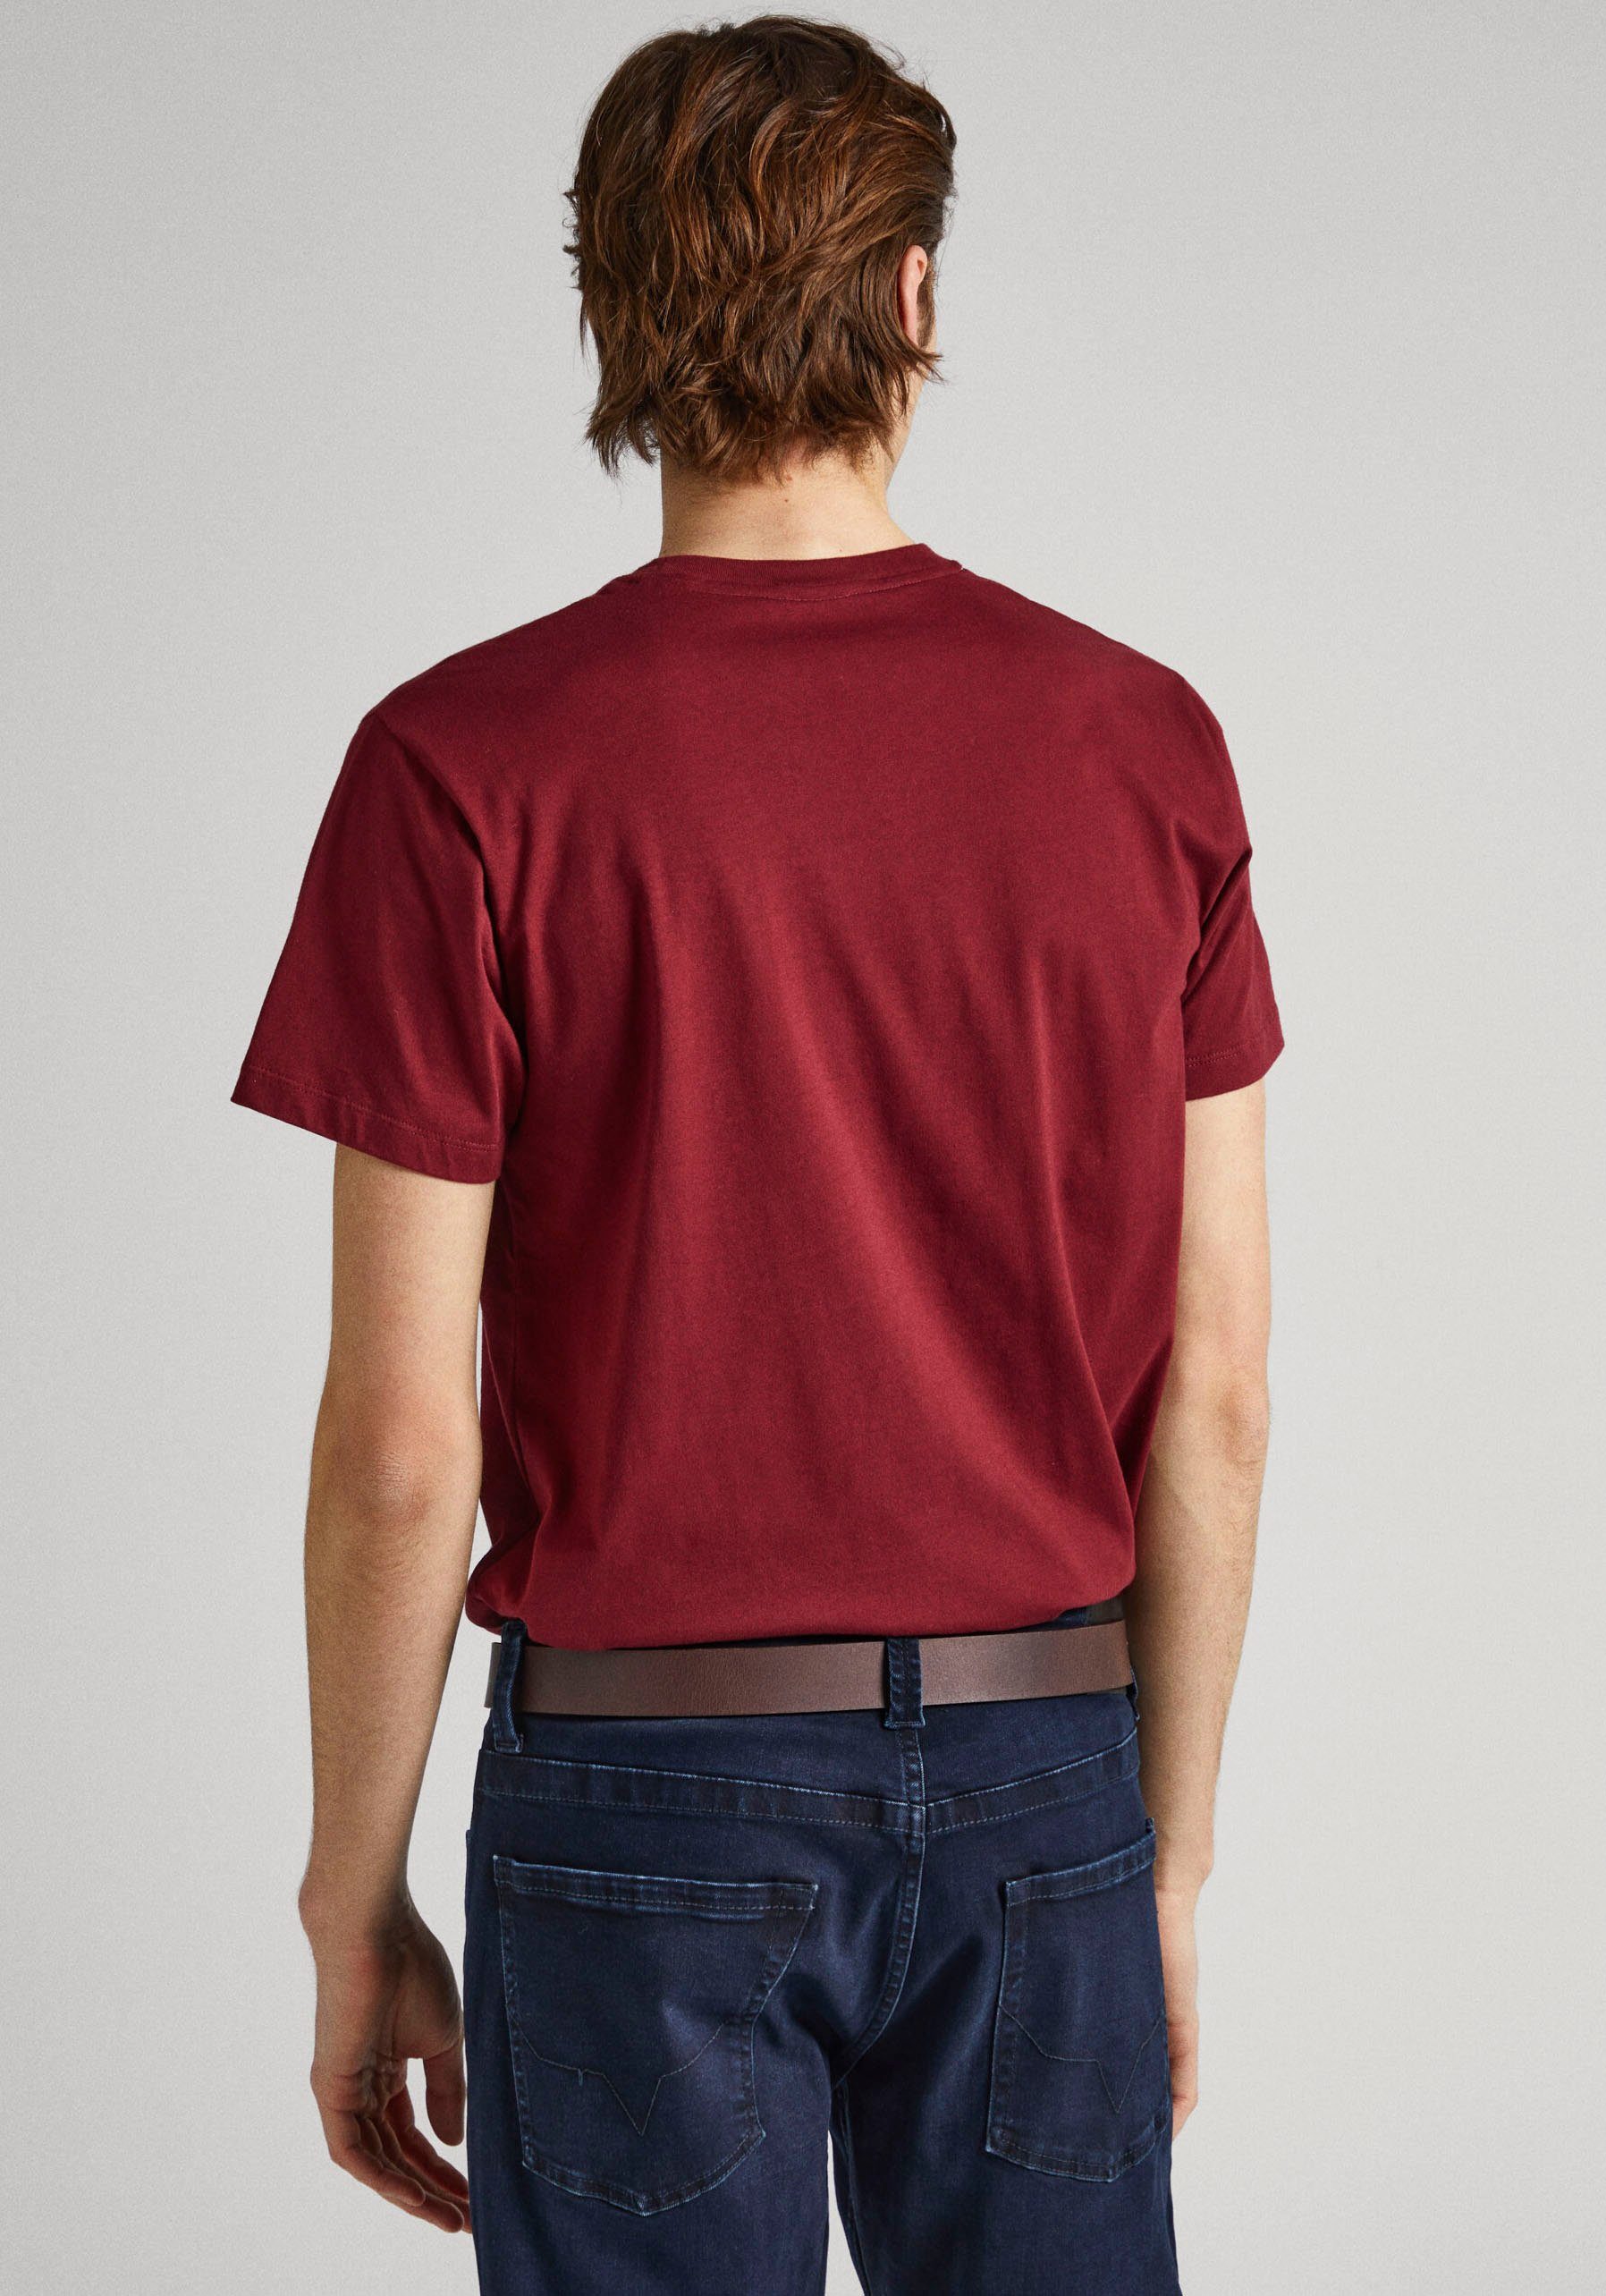 Pepe Jeans Print-Shirt burgundy EGGO